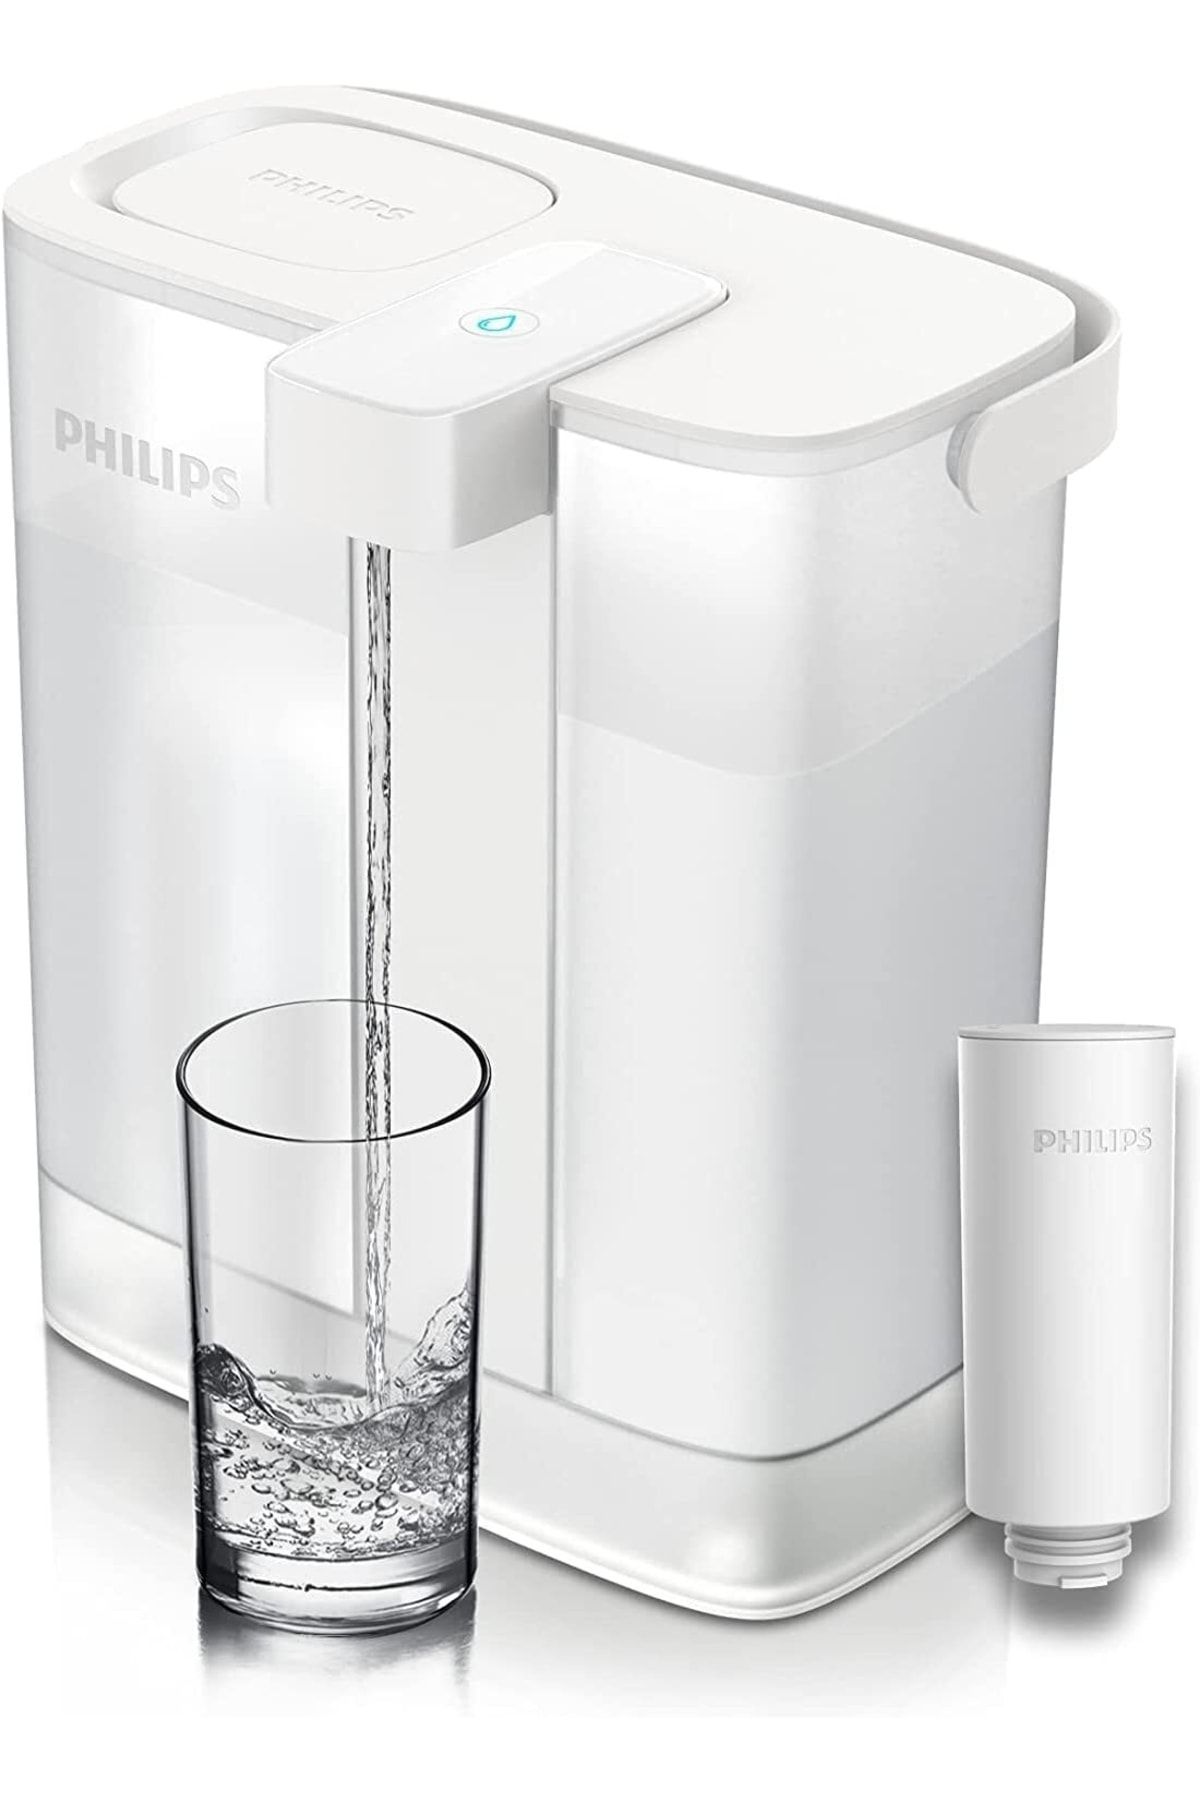 Philips Anında Su Filtresi, 3l Kapasiteli Su Filtreli Sürahi